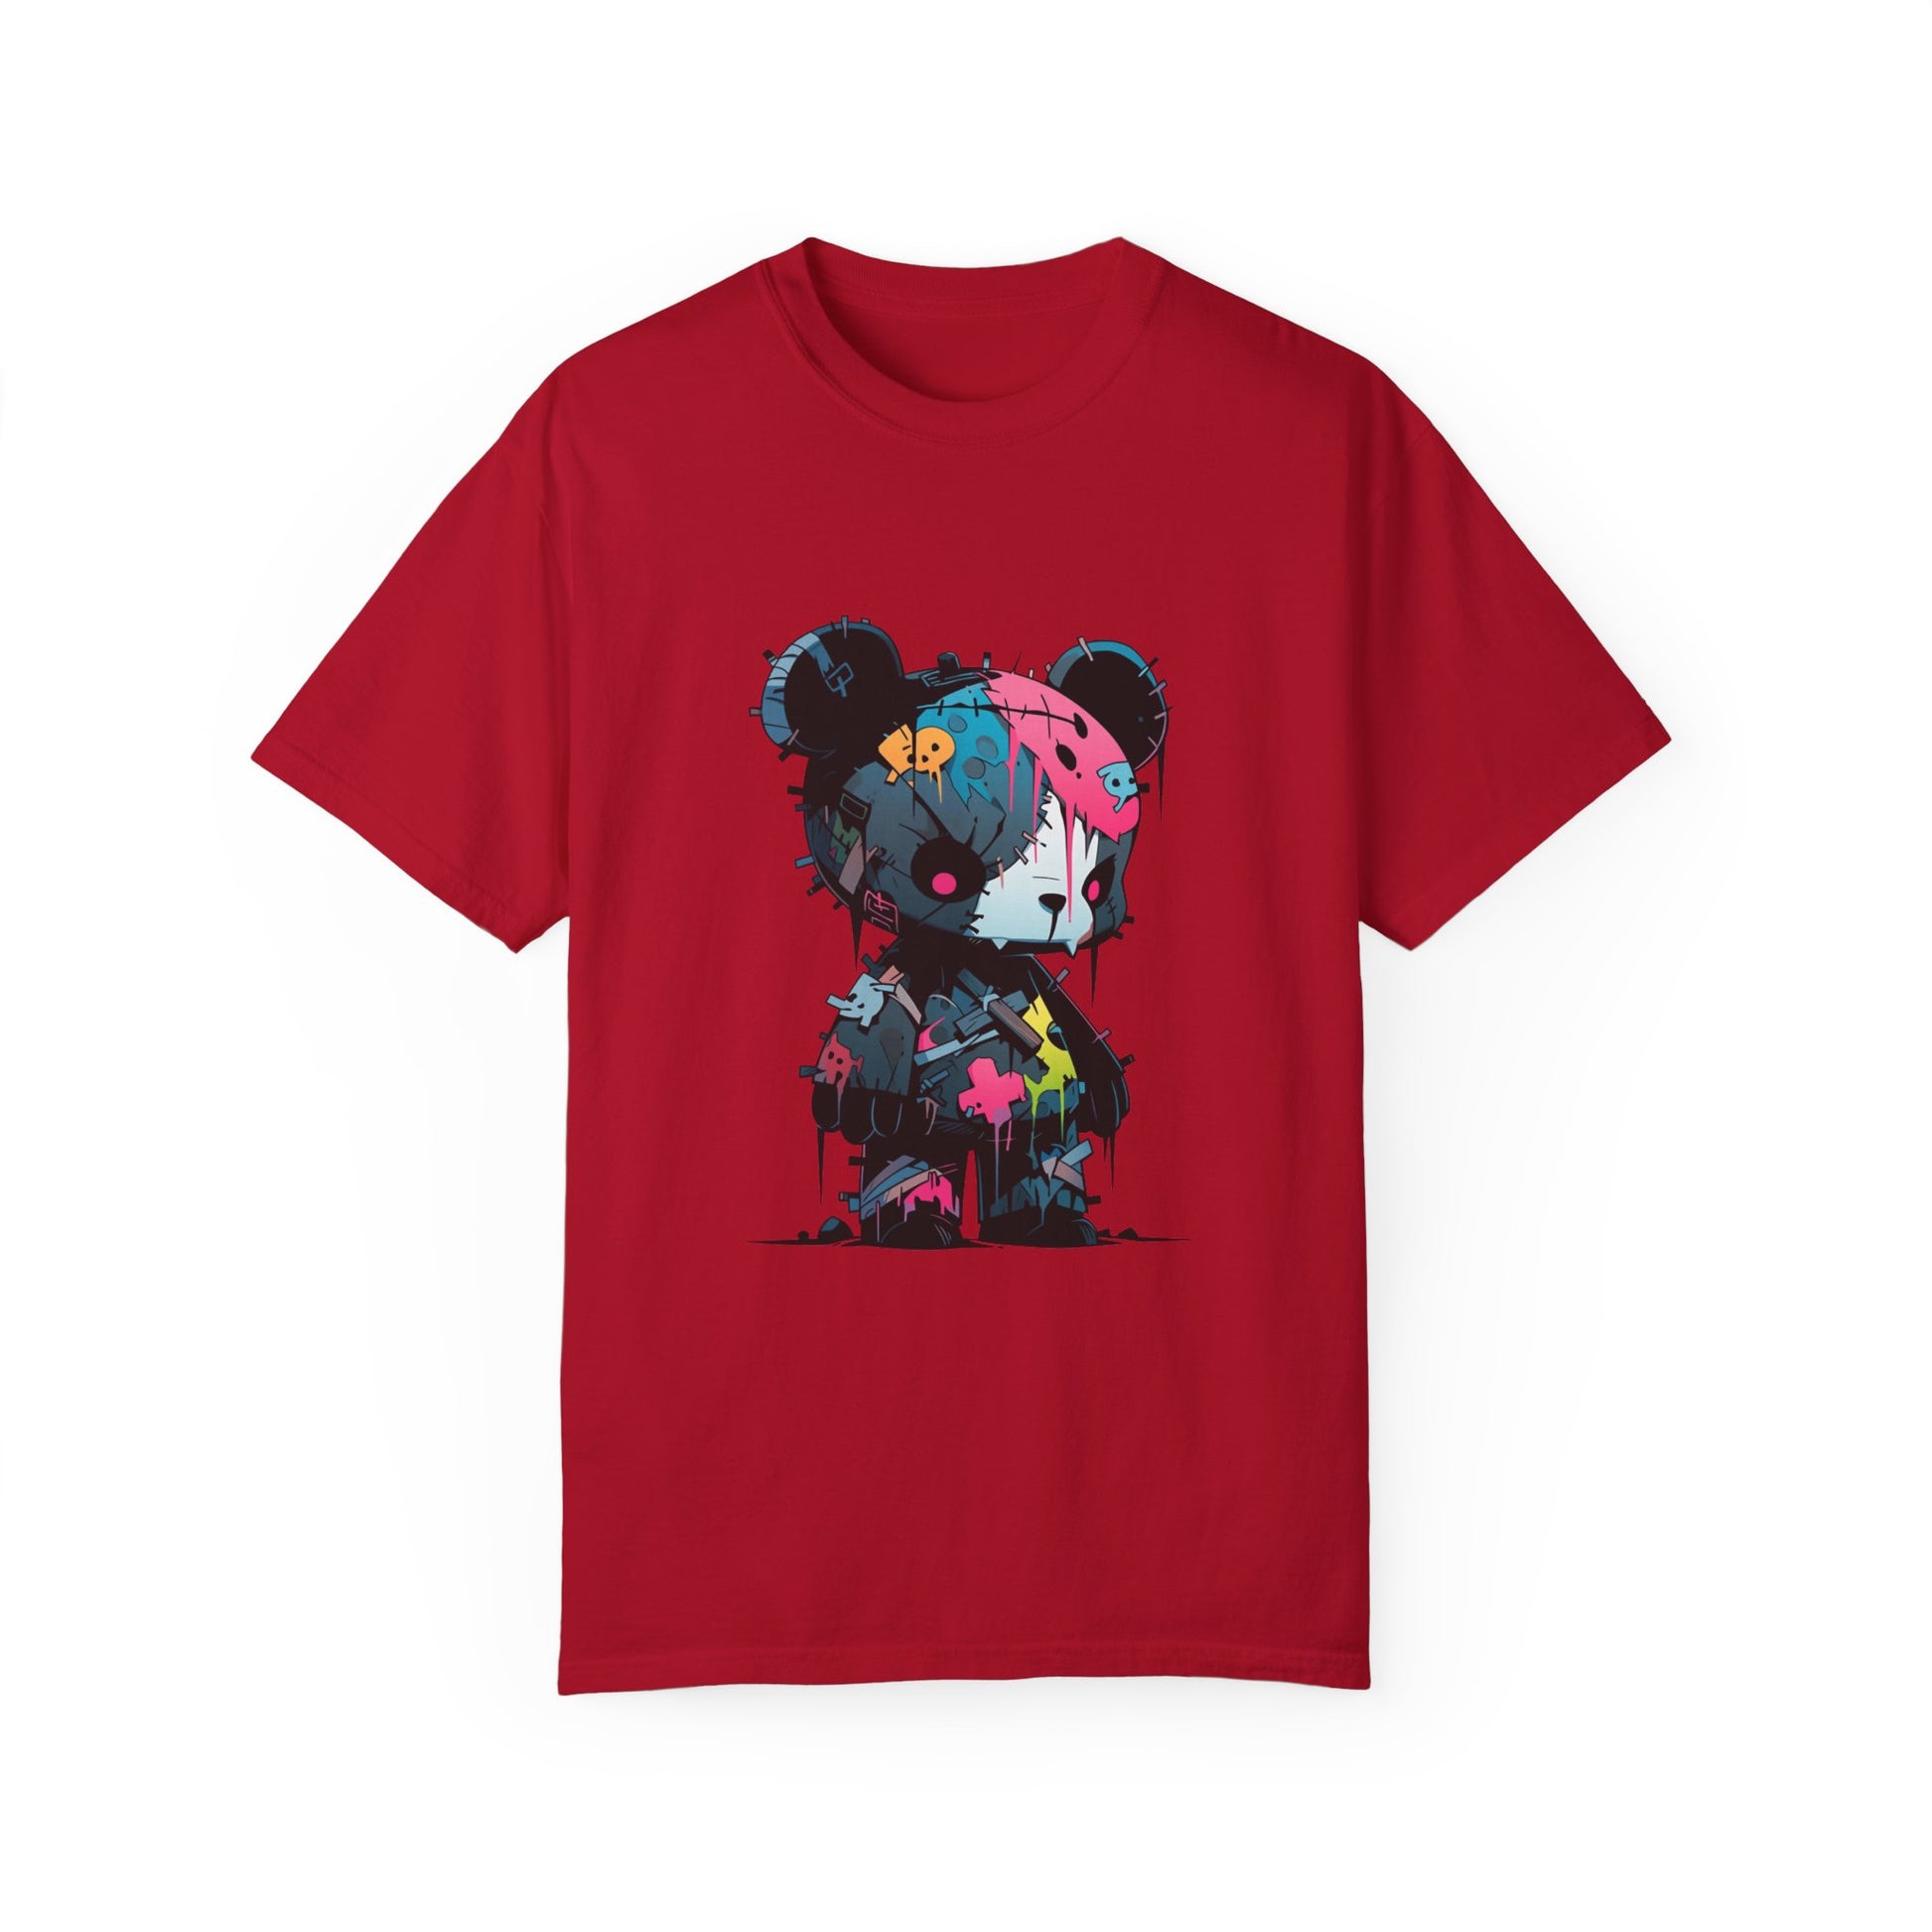 Hip Hop Teddy Bear Graphic Unisex Garment-dyed T-shirt Cotton Funny Humorous Graphic Soft Premium Unisex Men Women Red T-shirt Birthday Gift-3